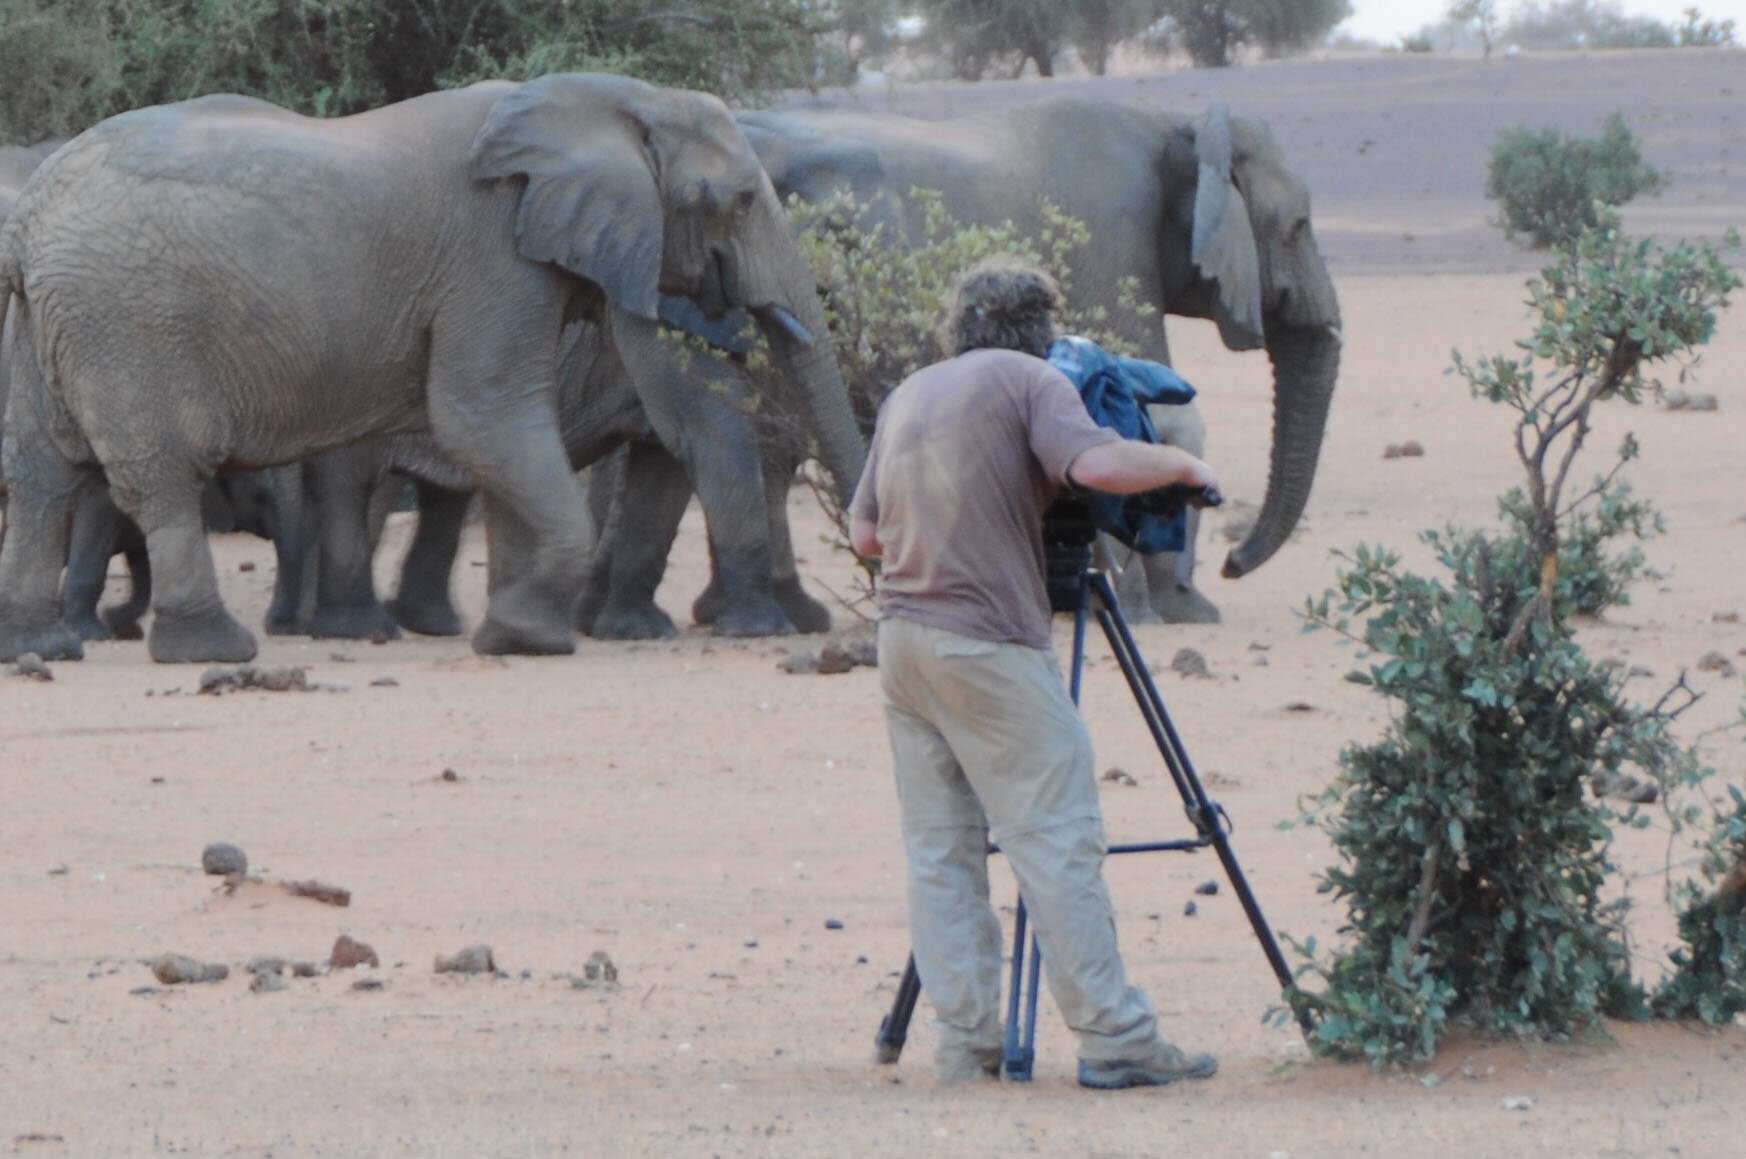 filming Mali elephants_2.jpg